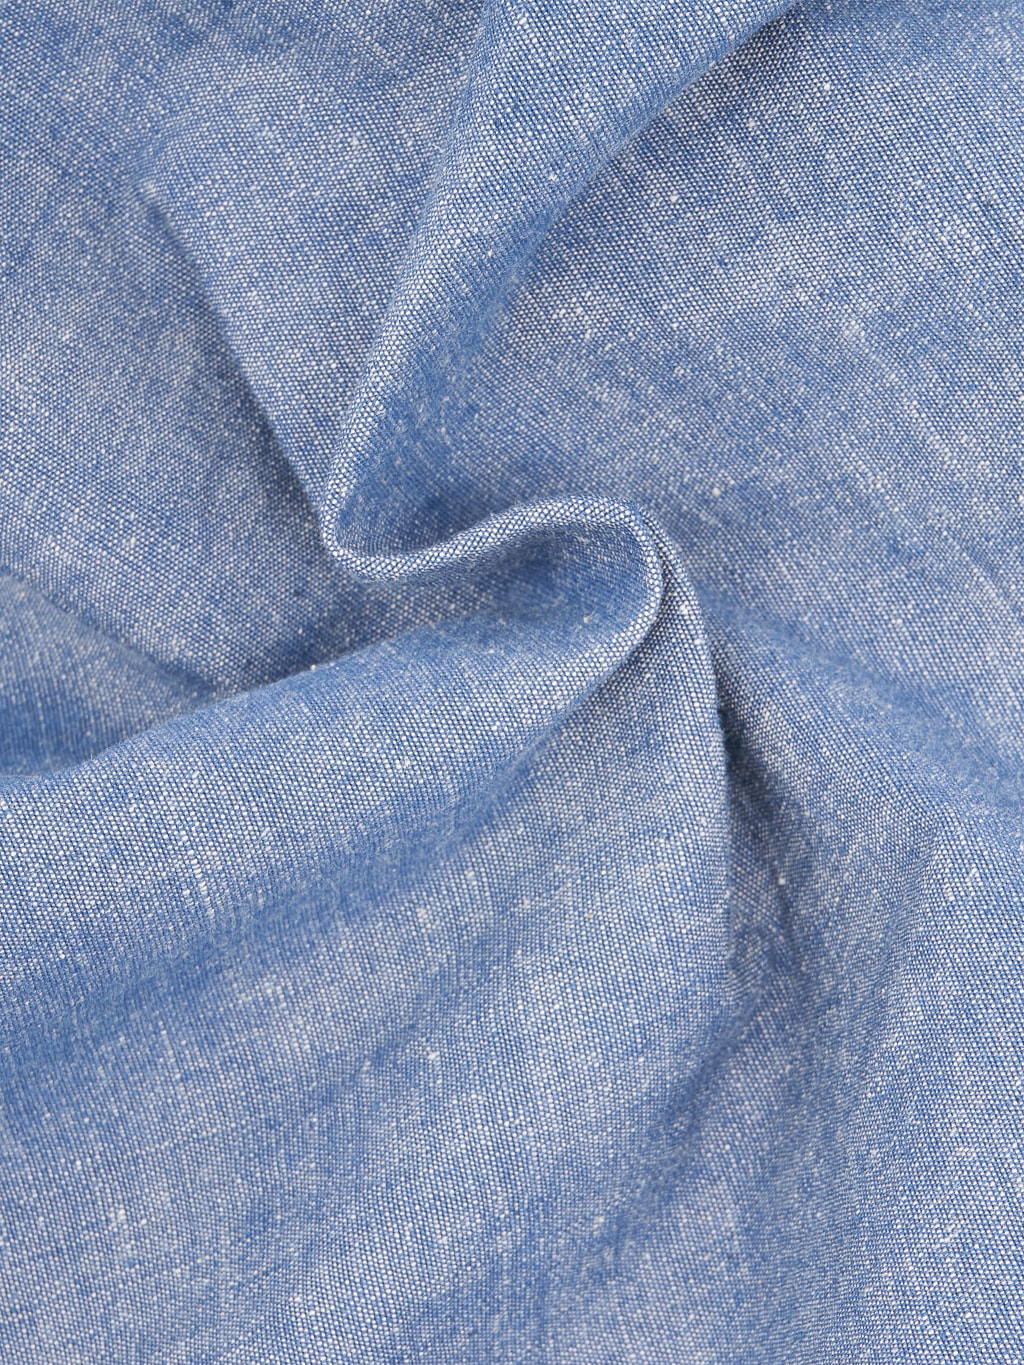 Oni denim heavy chambray blue gray coverall cotton fabric texture